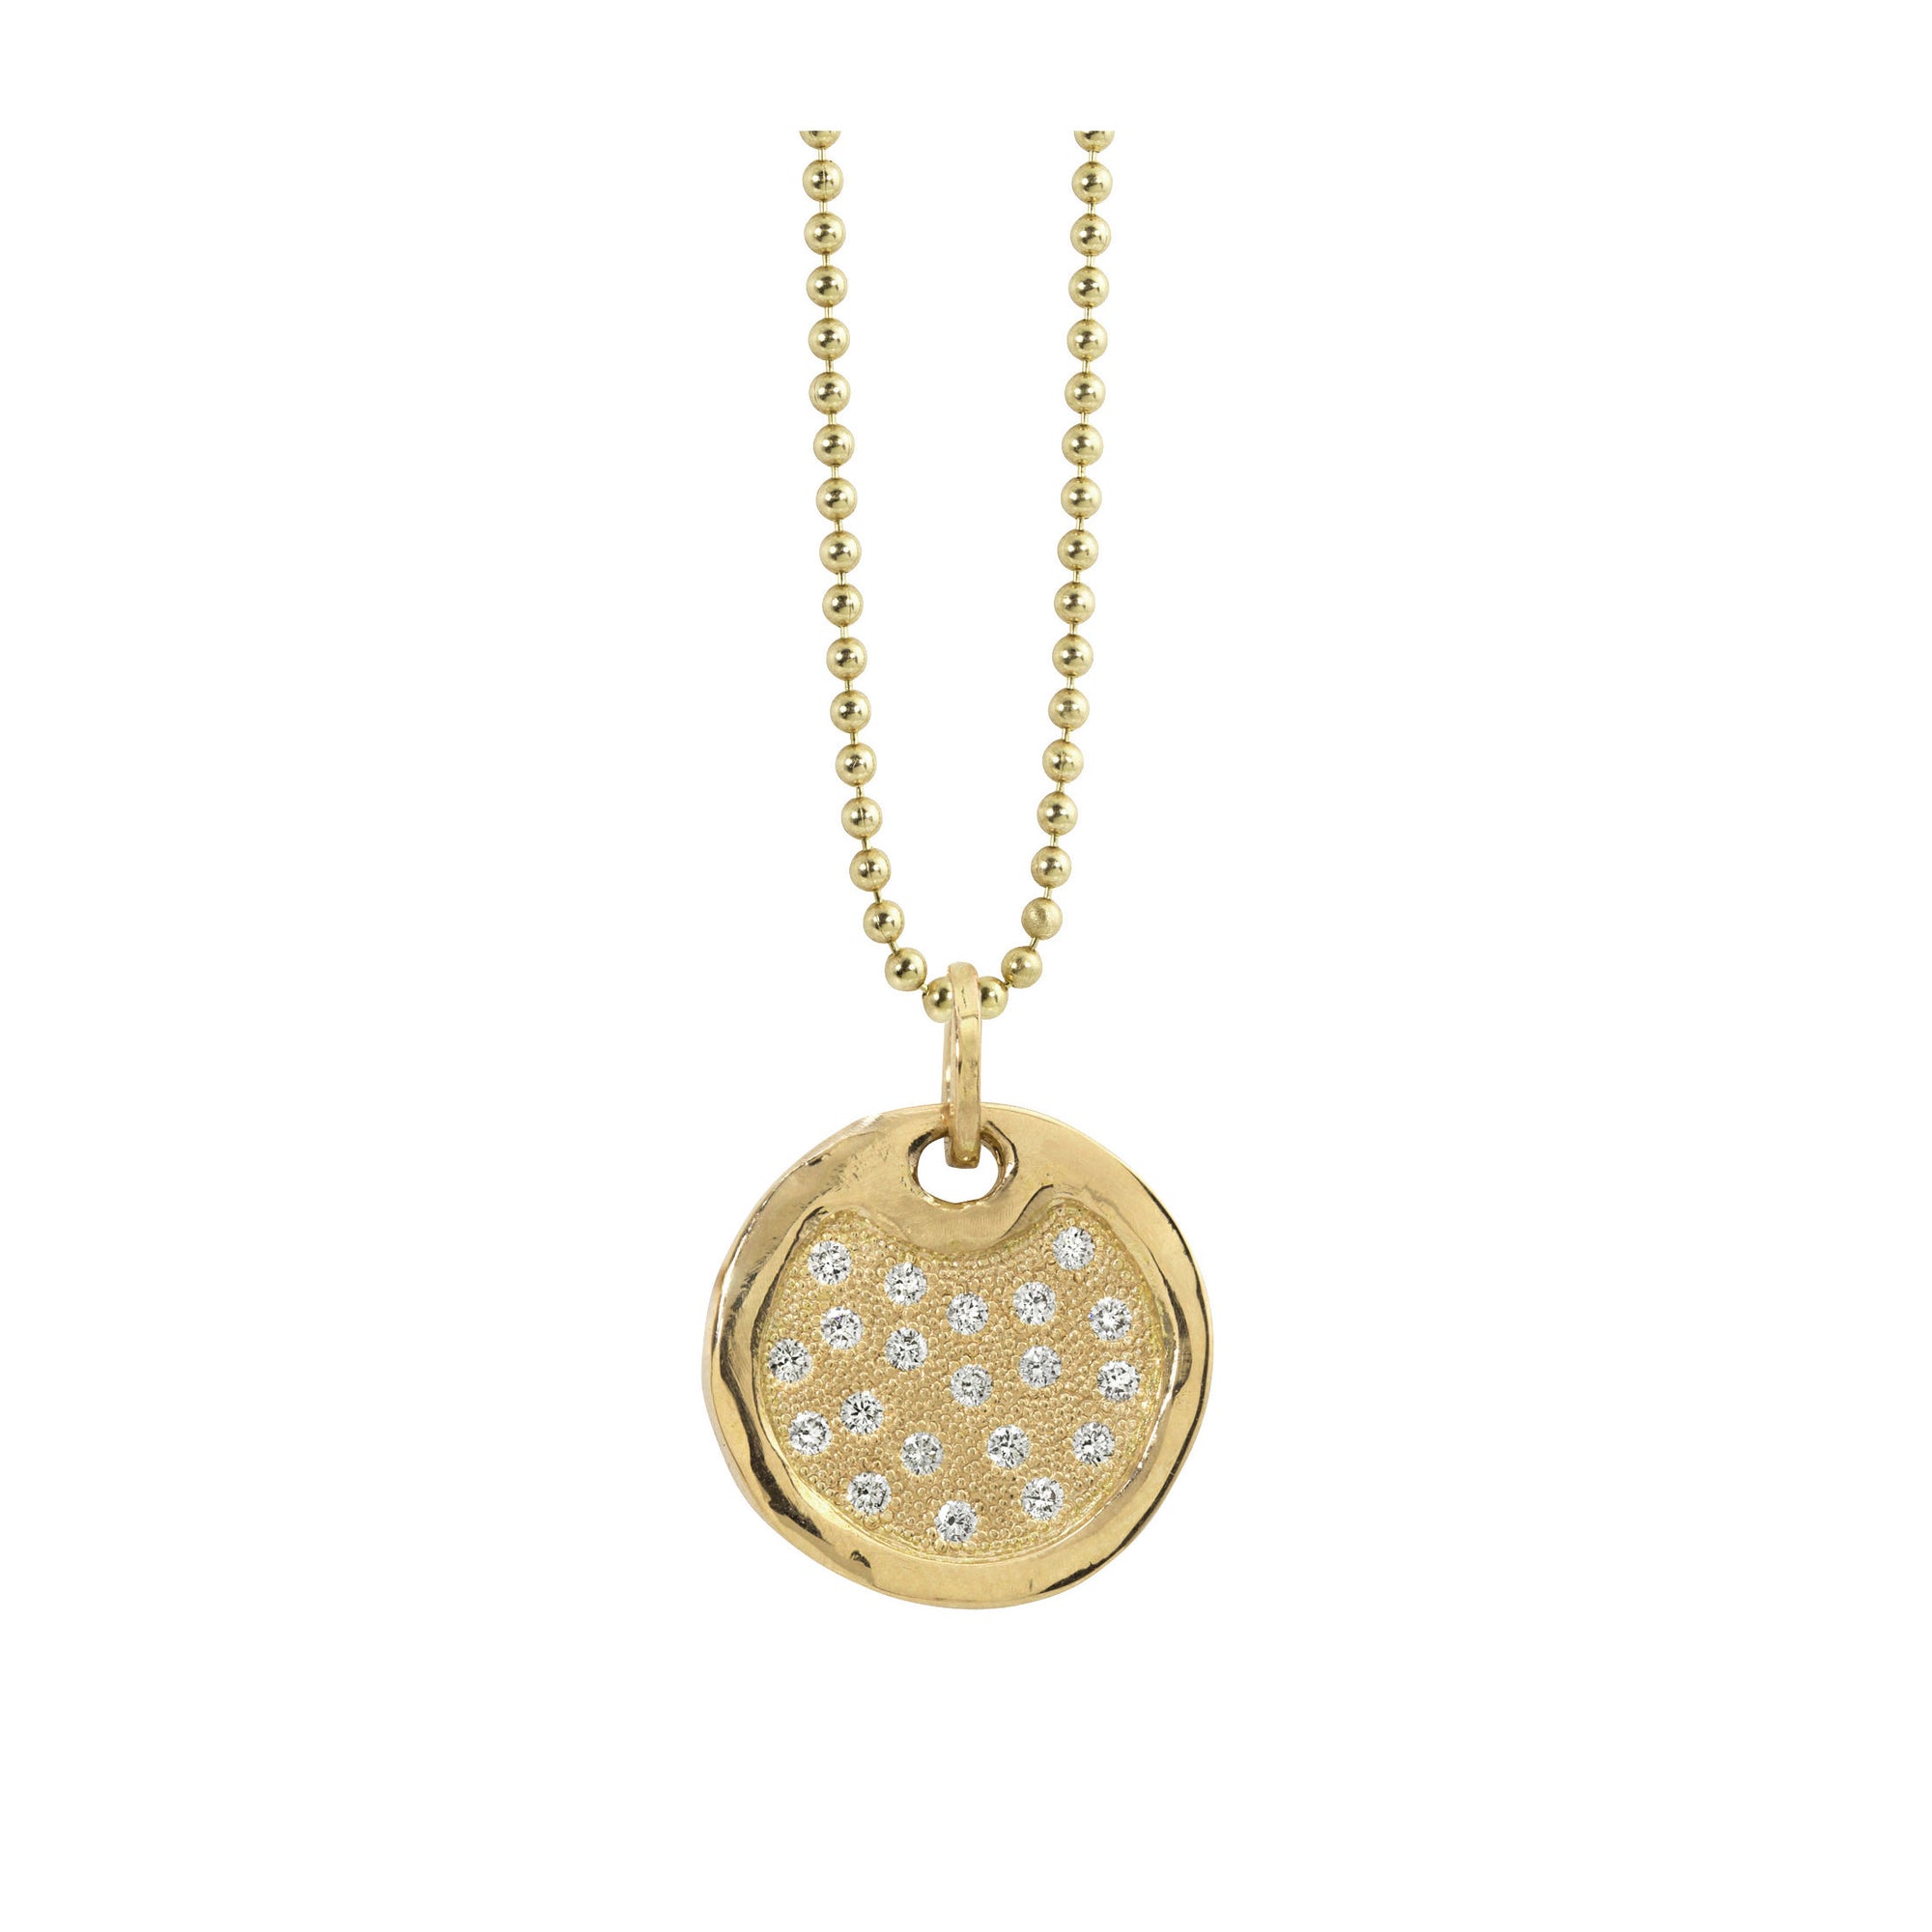 14k yellow gold medium DENA pendant with scattered diamonds